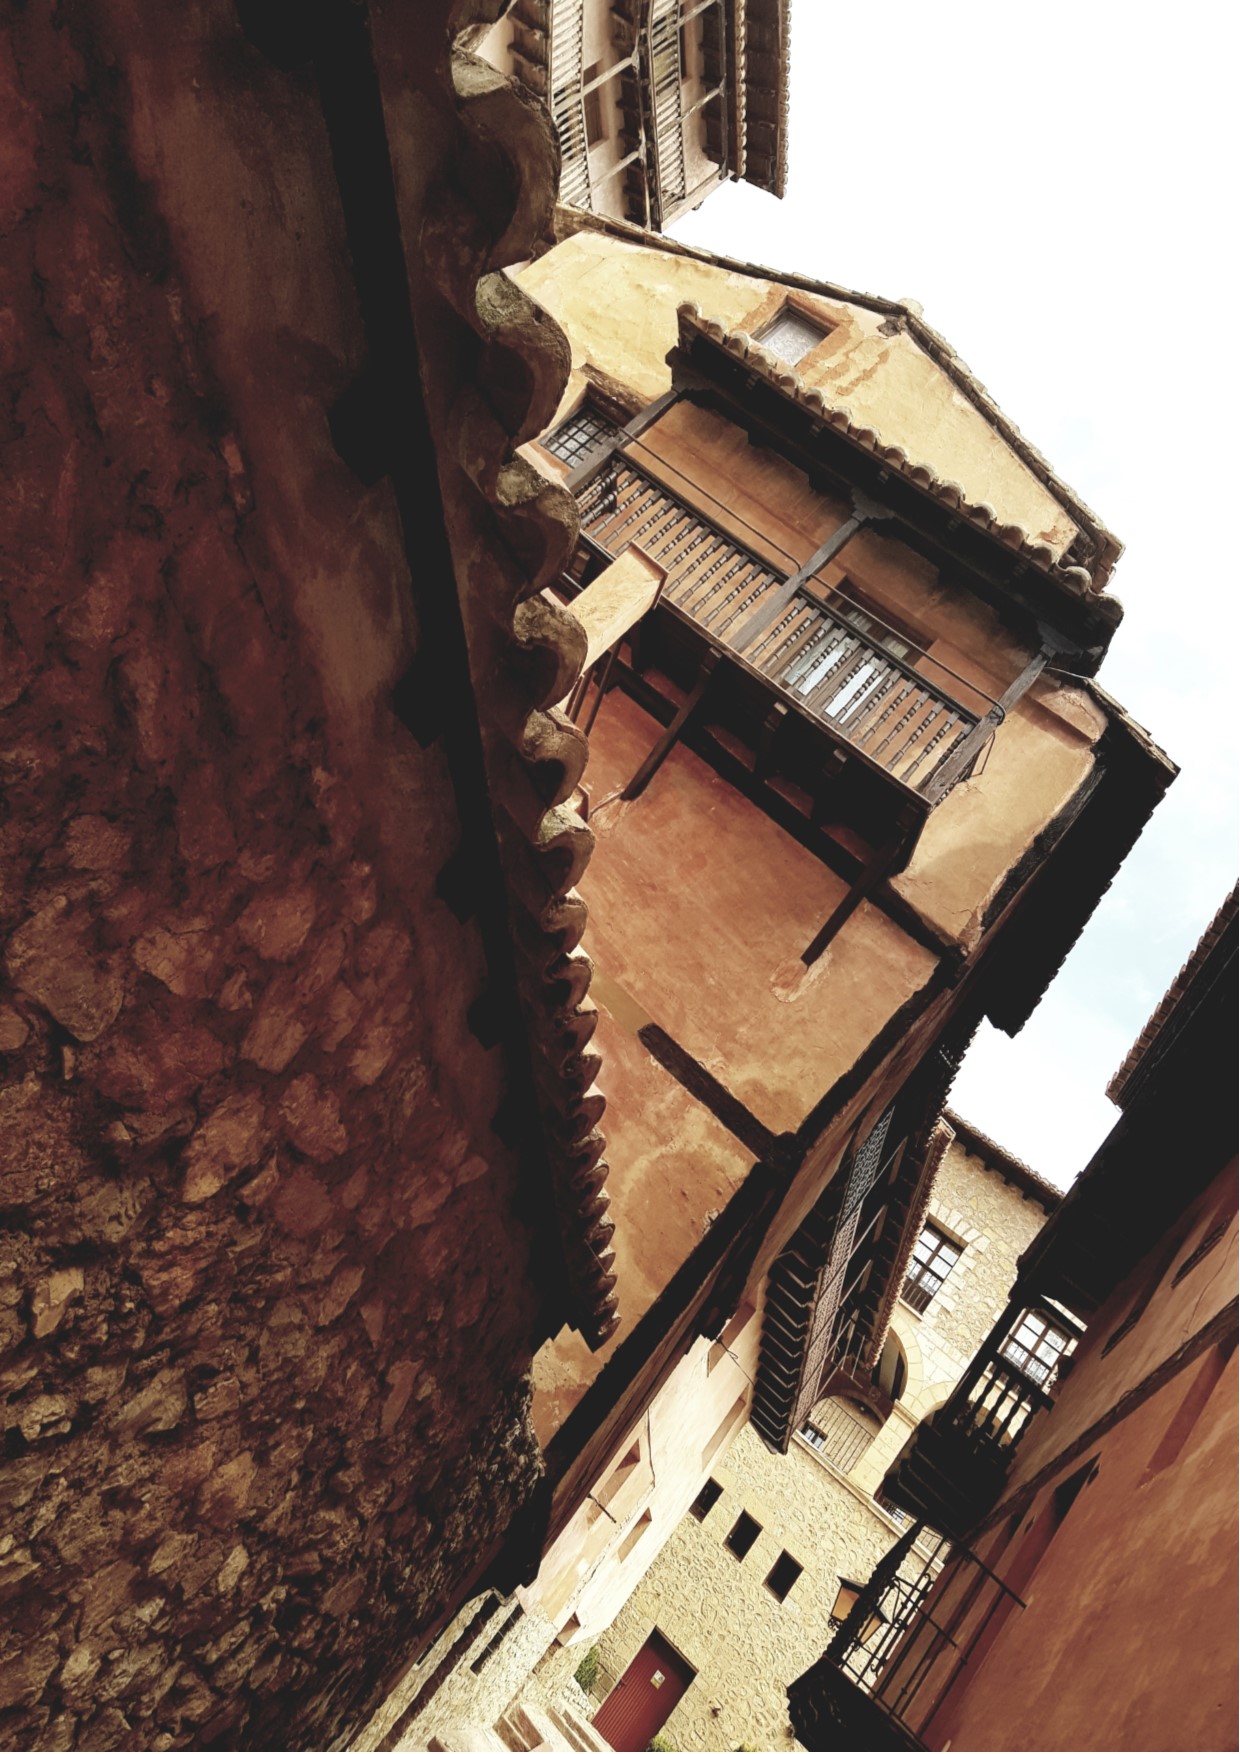 #Rincones que #maravillan…#niveles de arquitectura adaptándose a la orografía de #Albarracín tan característica…descubre #Albarracín de #VisitaGuiada en www.elandadoralbarracin.es